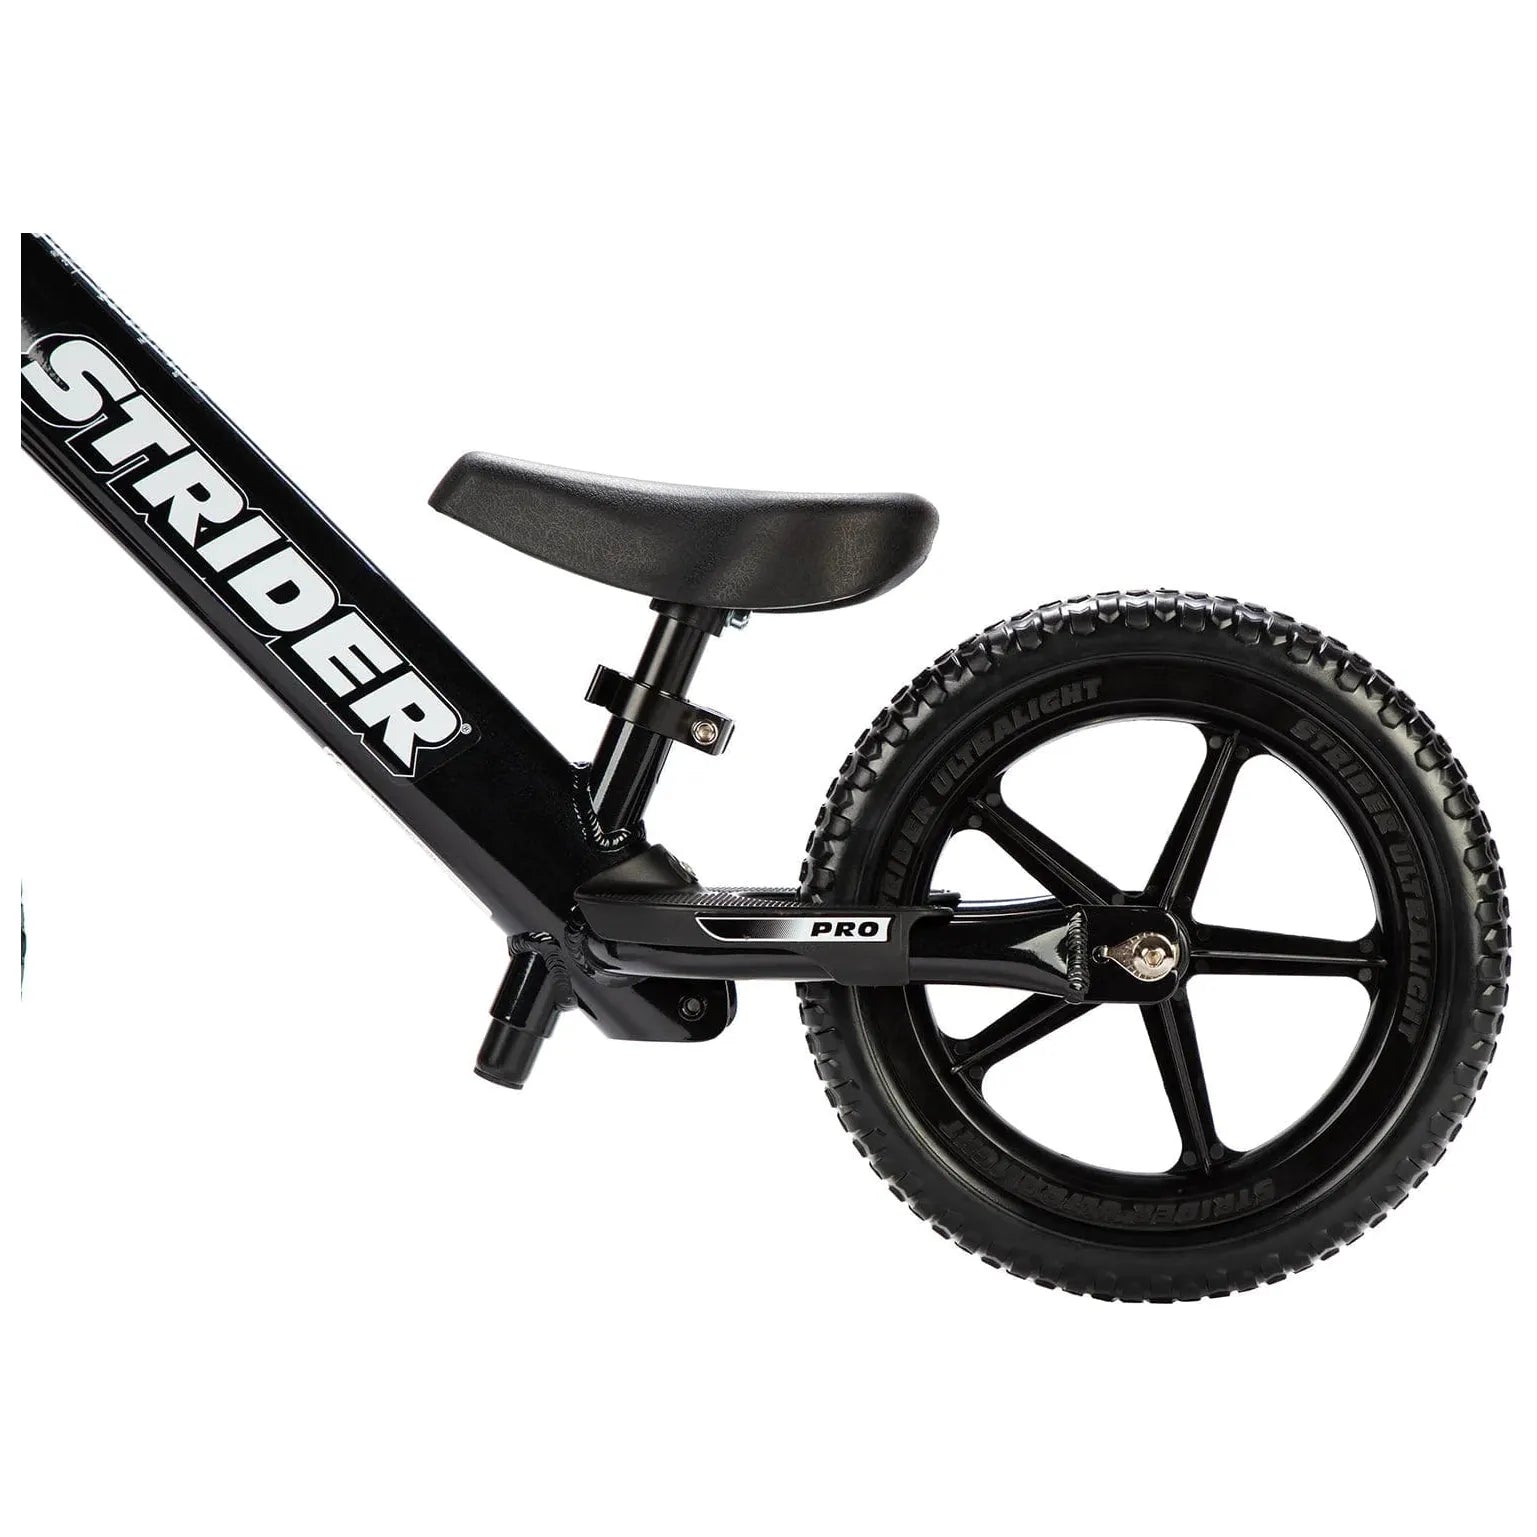 Strider Pro 12 inch Balance Bike - Black rear wheel close up